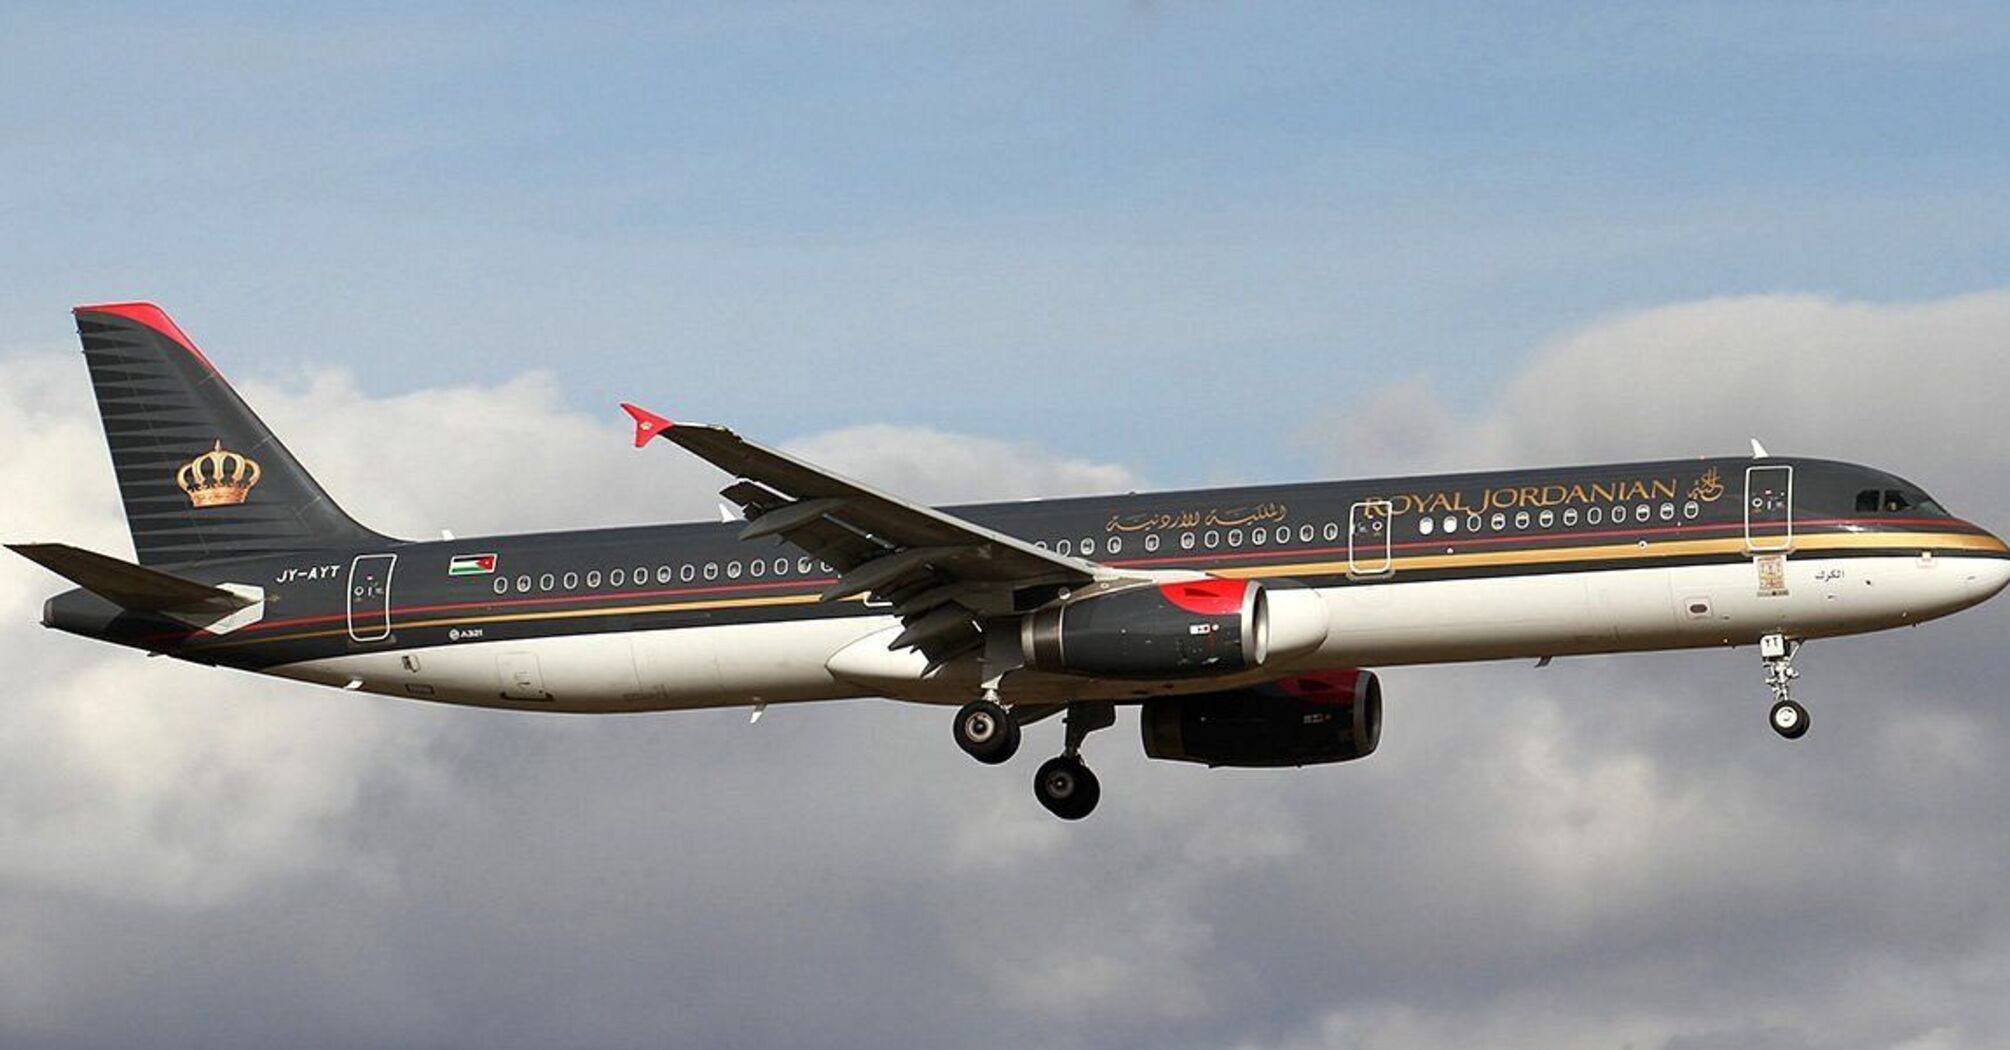 Royal Jordanian Airlines Compensation for Delayed or Cancelled Flights